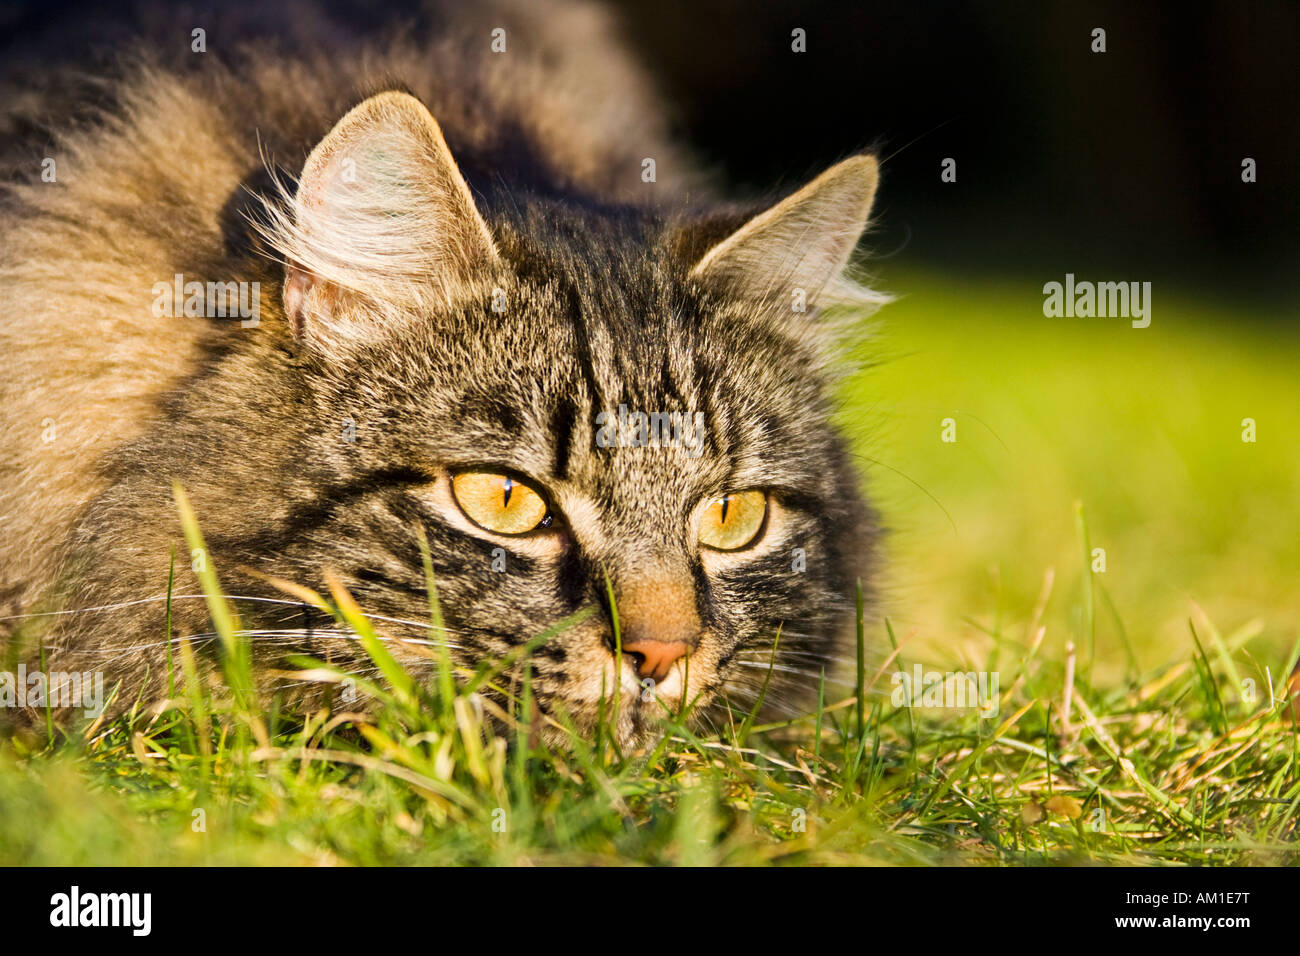 Longhair cat Stock Photo